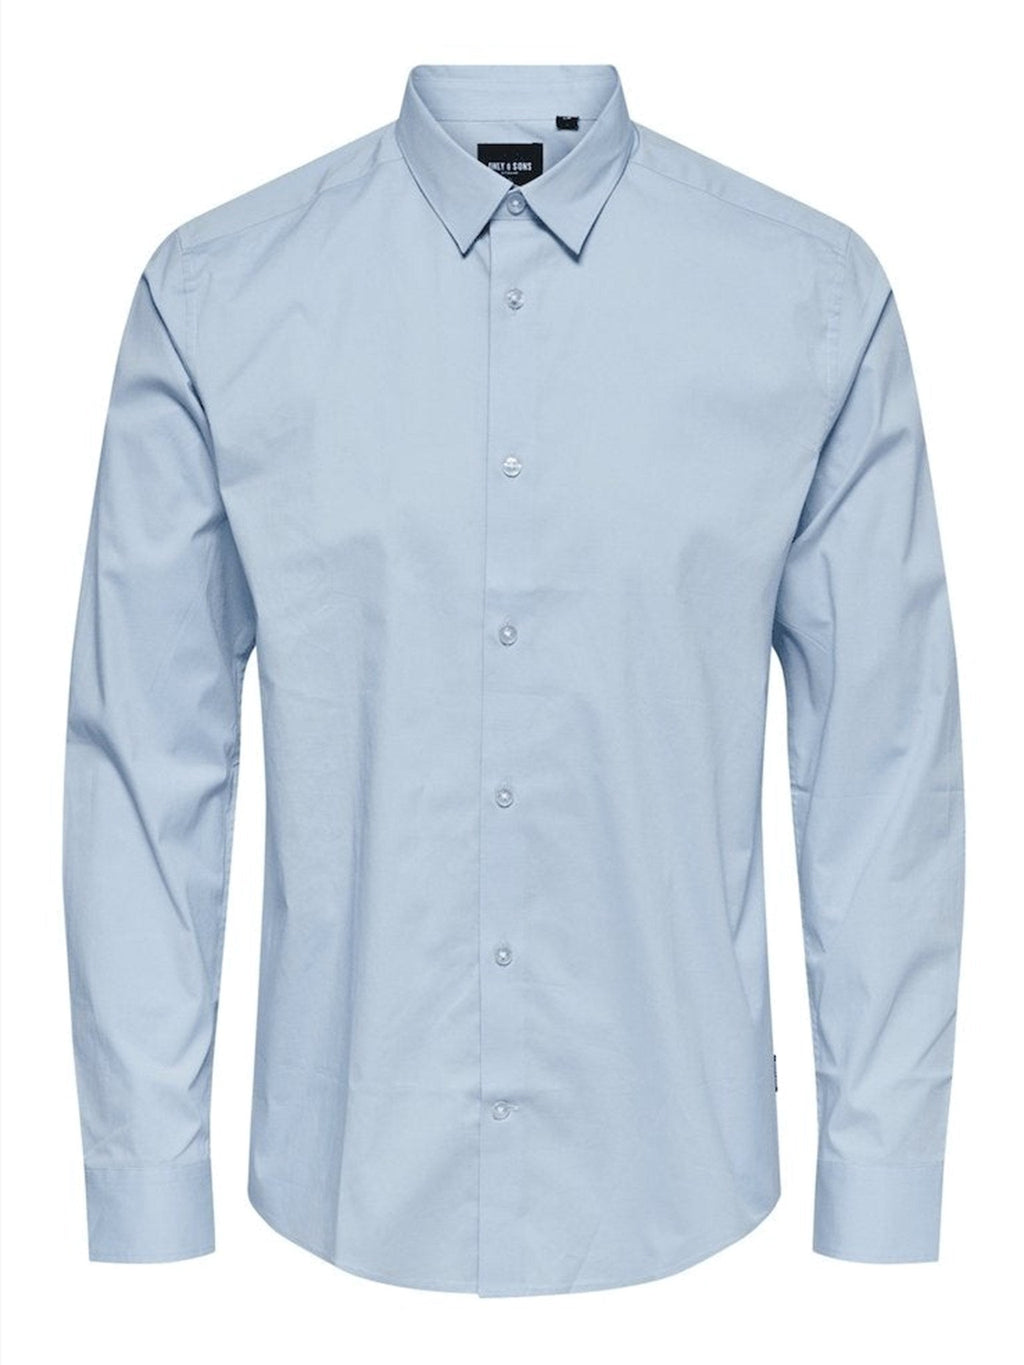 Bart Eco Shirt - Bleu clair (coton biologique)